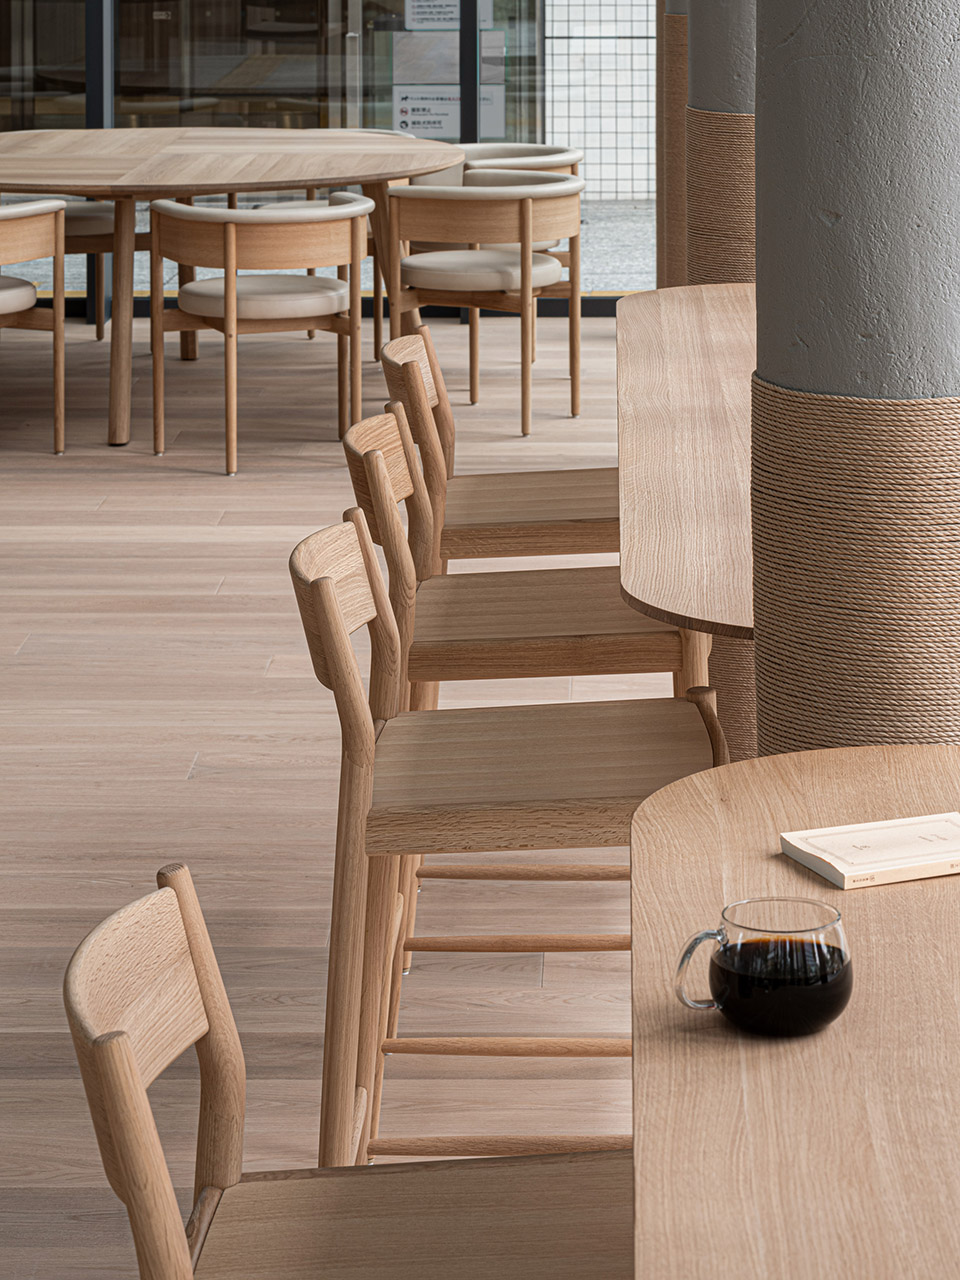 Blue Bottle咖啡港未来店，东京/科技与工艺结合的木制家具-19